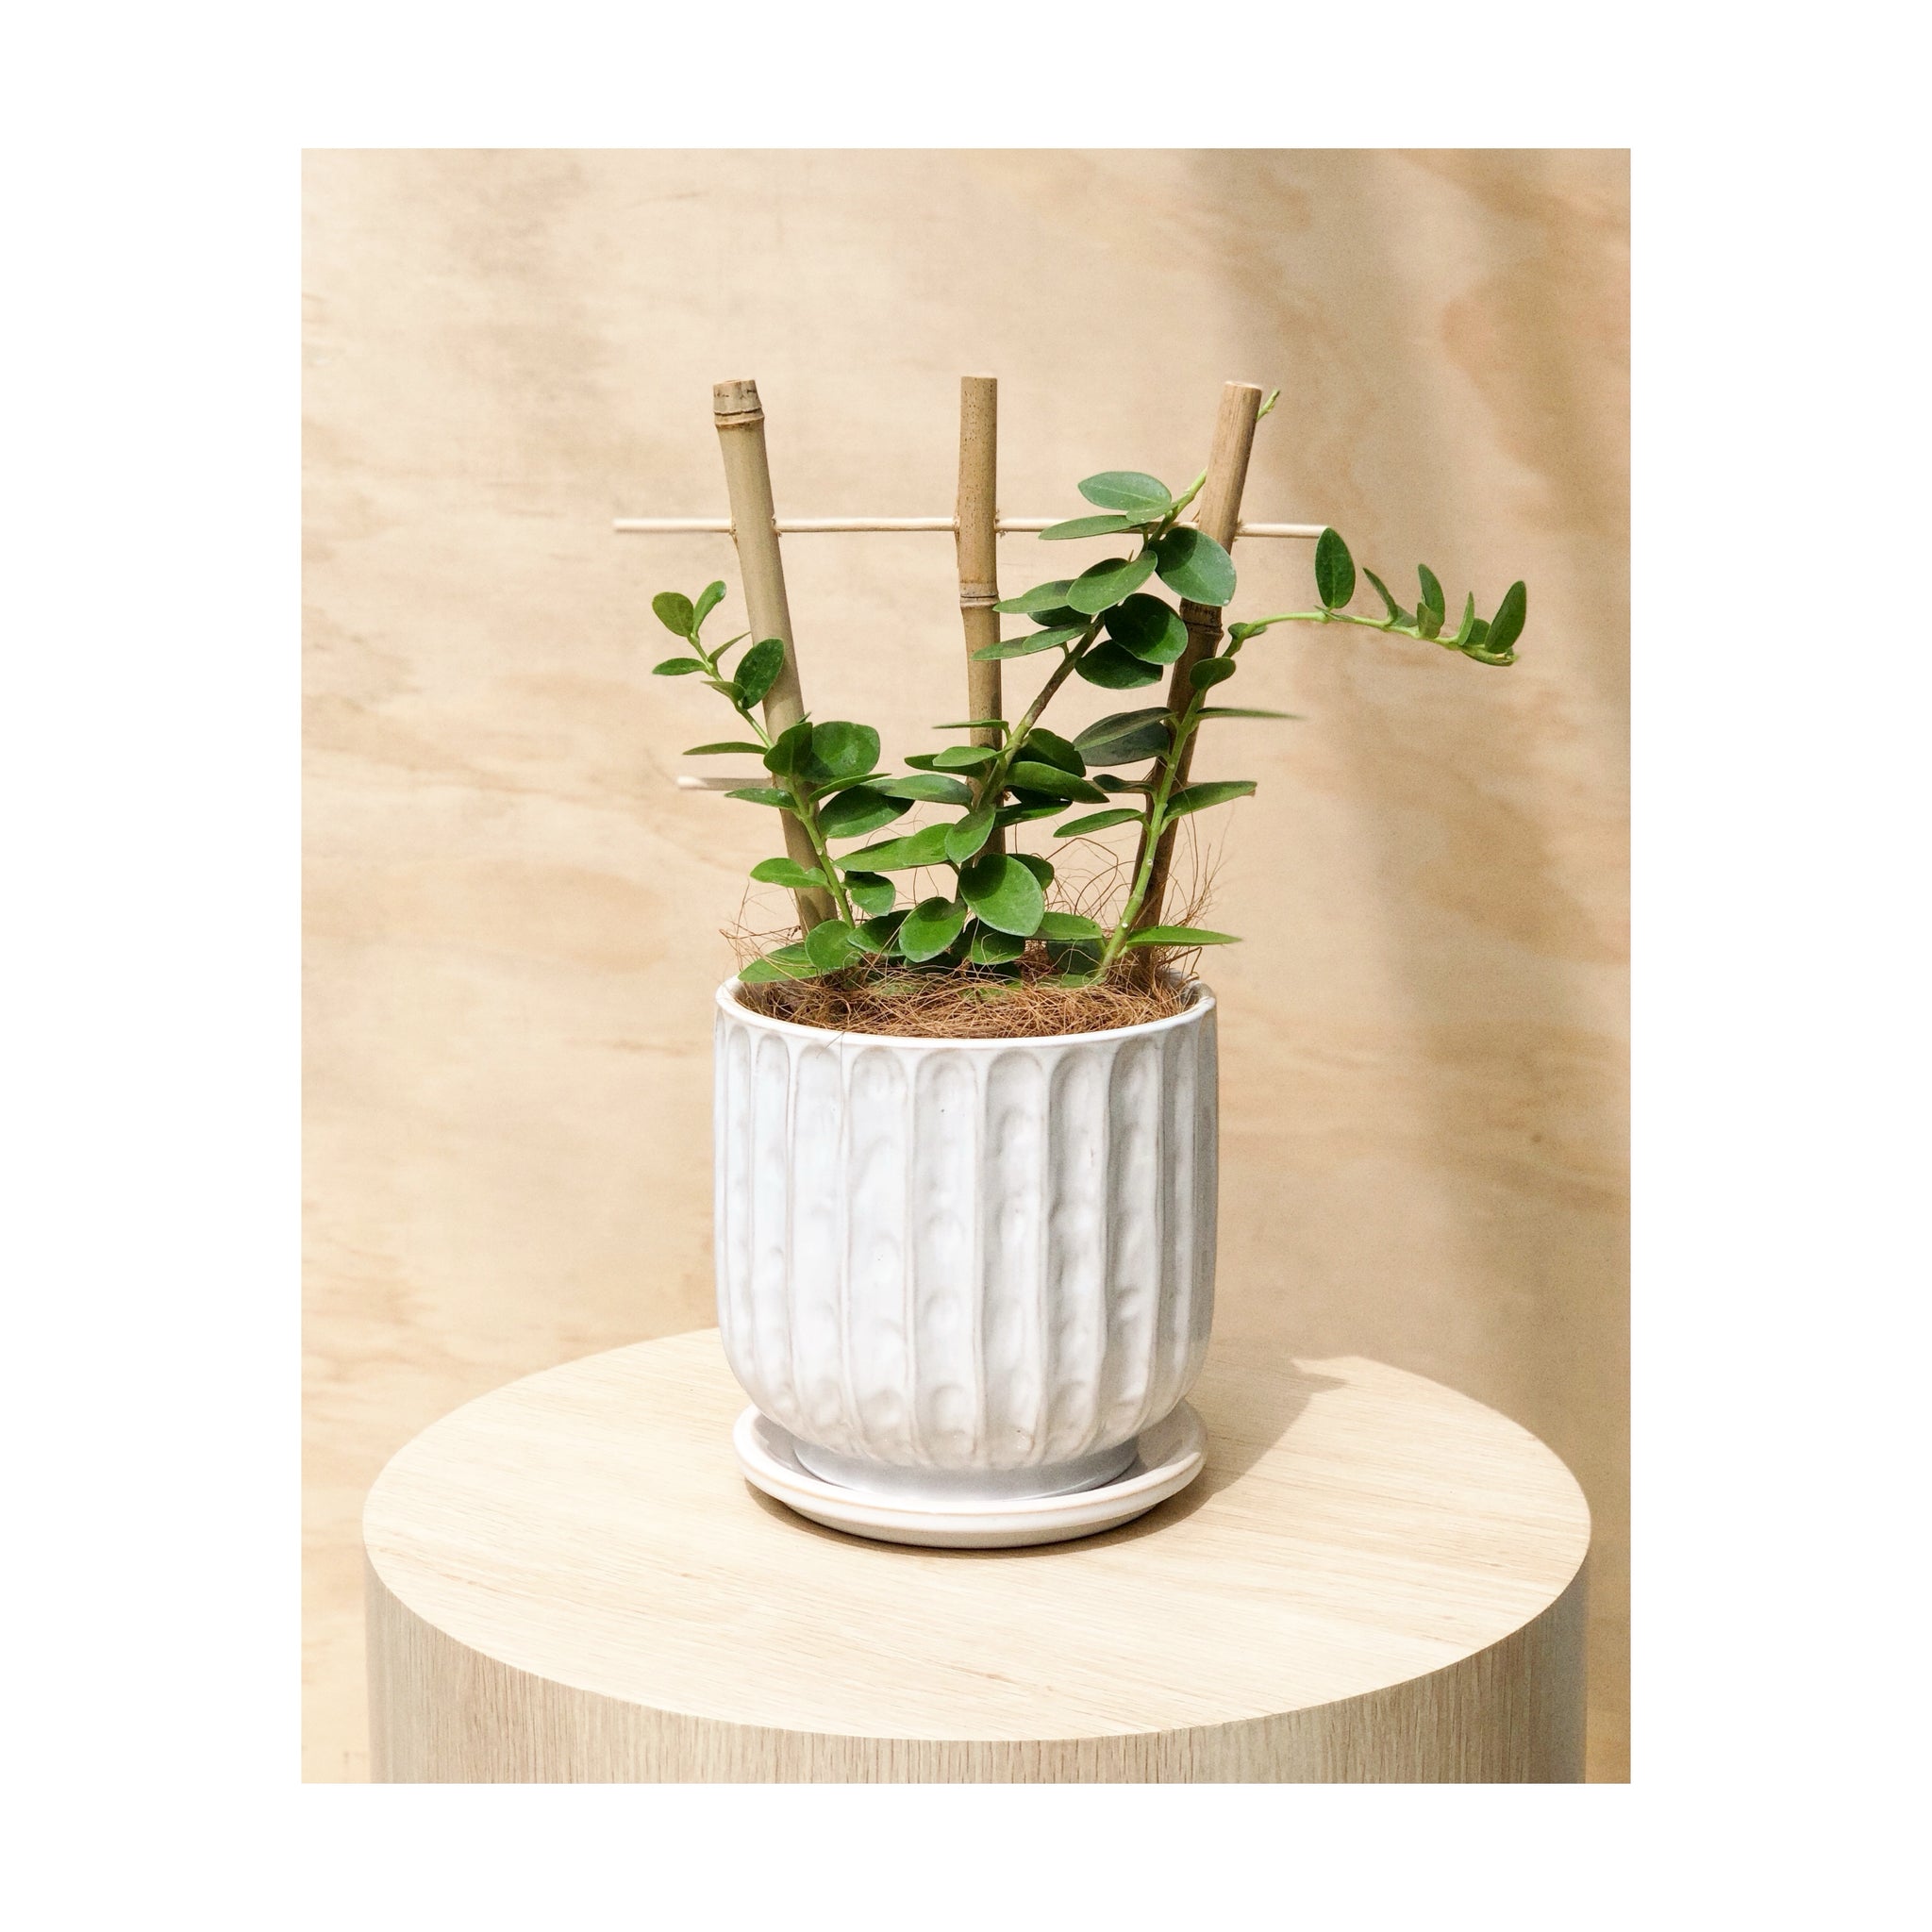 Clovelly Ceramic Decorative Indoor Plant Pot & Saucer with White Glaze + Hoya Cummingiana (Wax Plant)